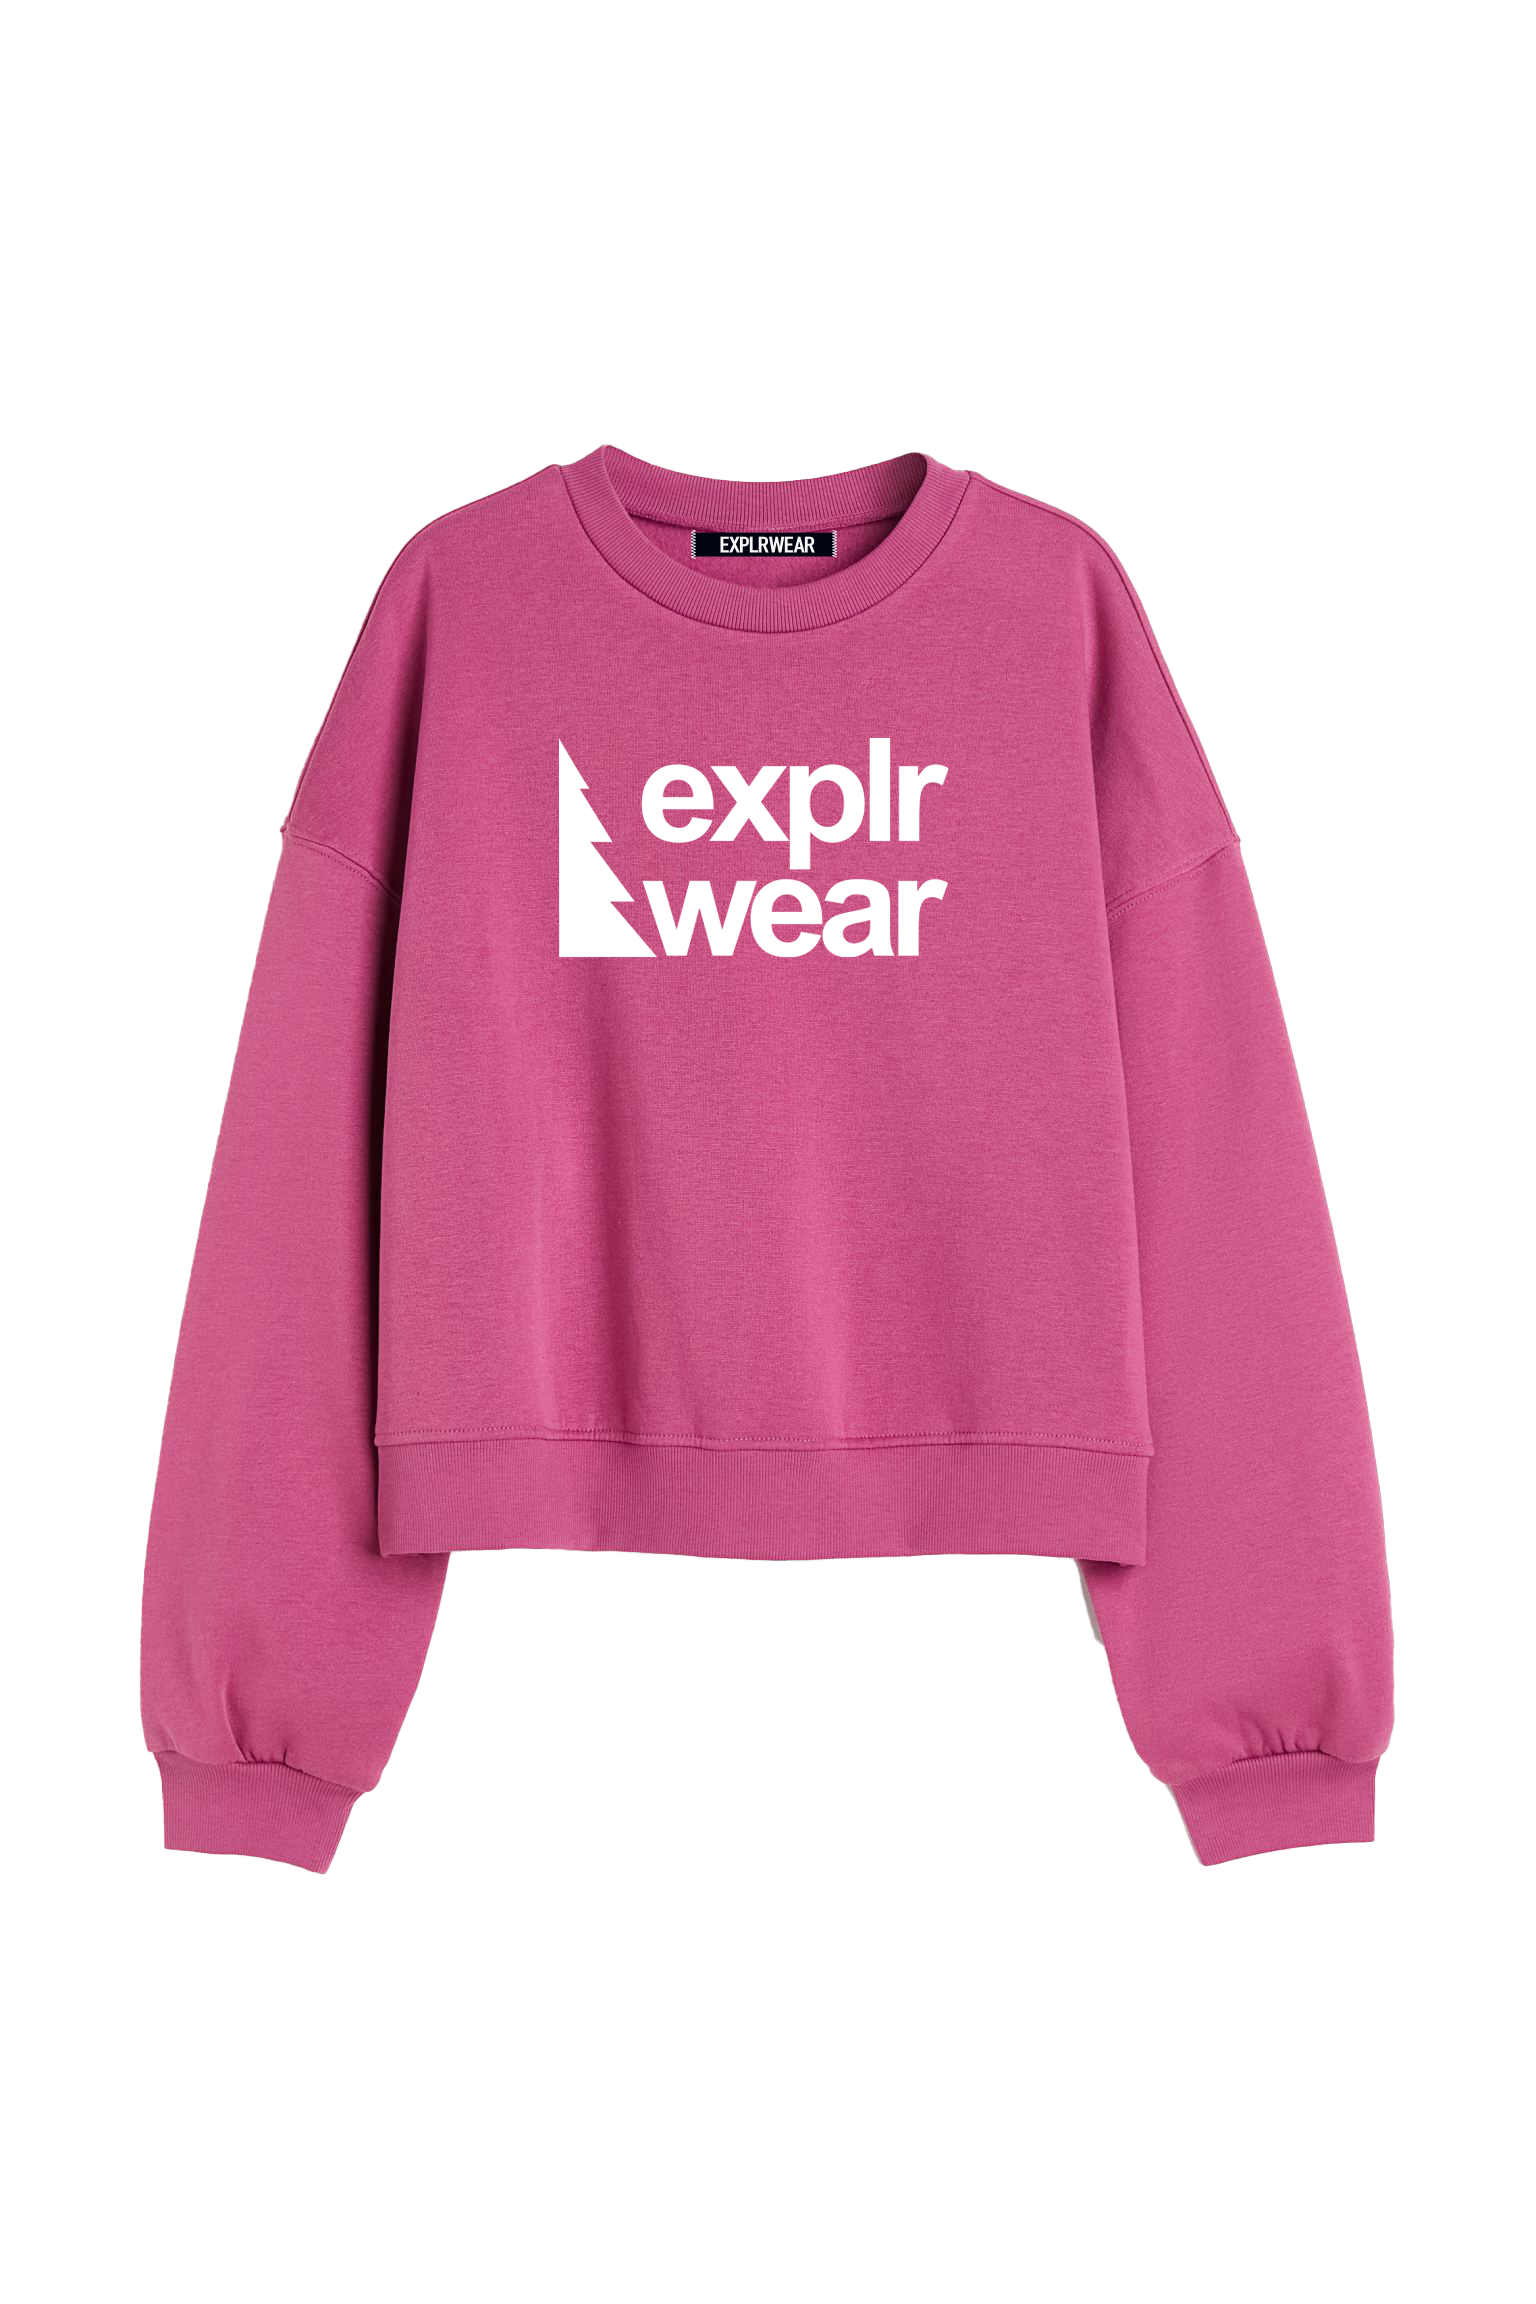 ExplrWear Pink  - Sweatshirt - Explr